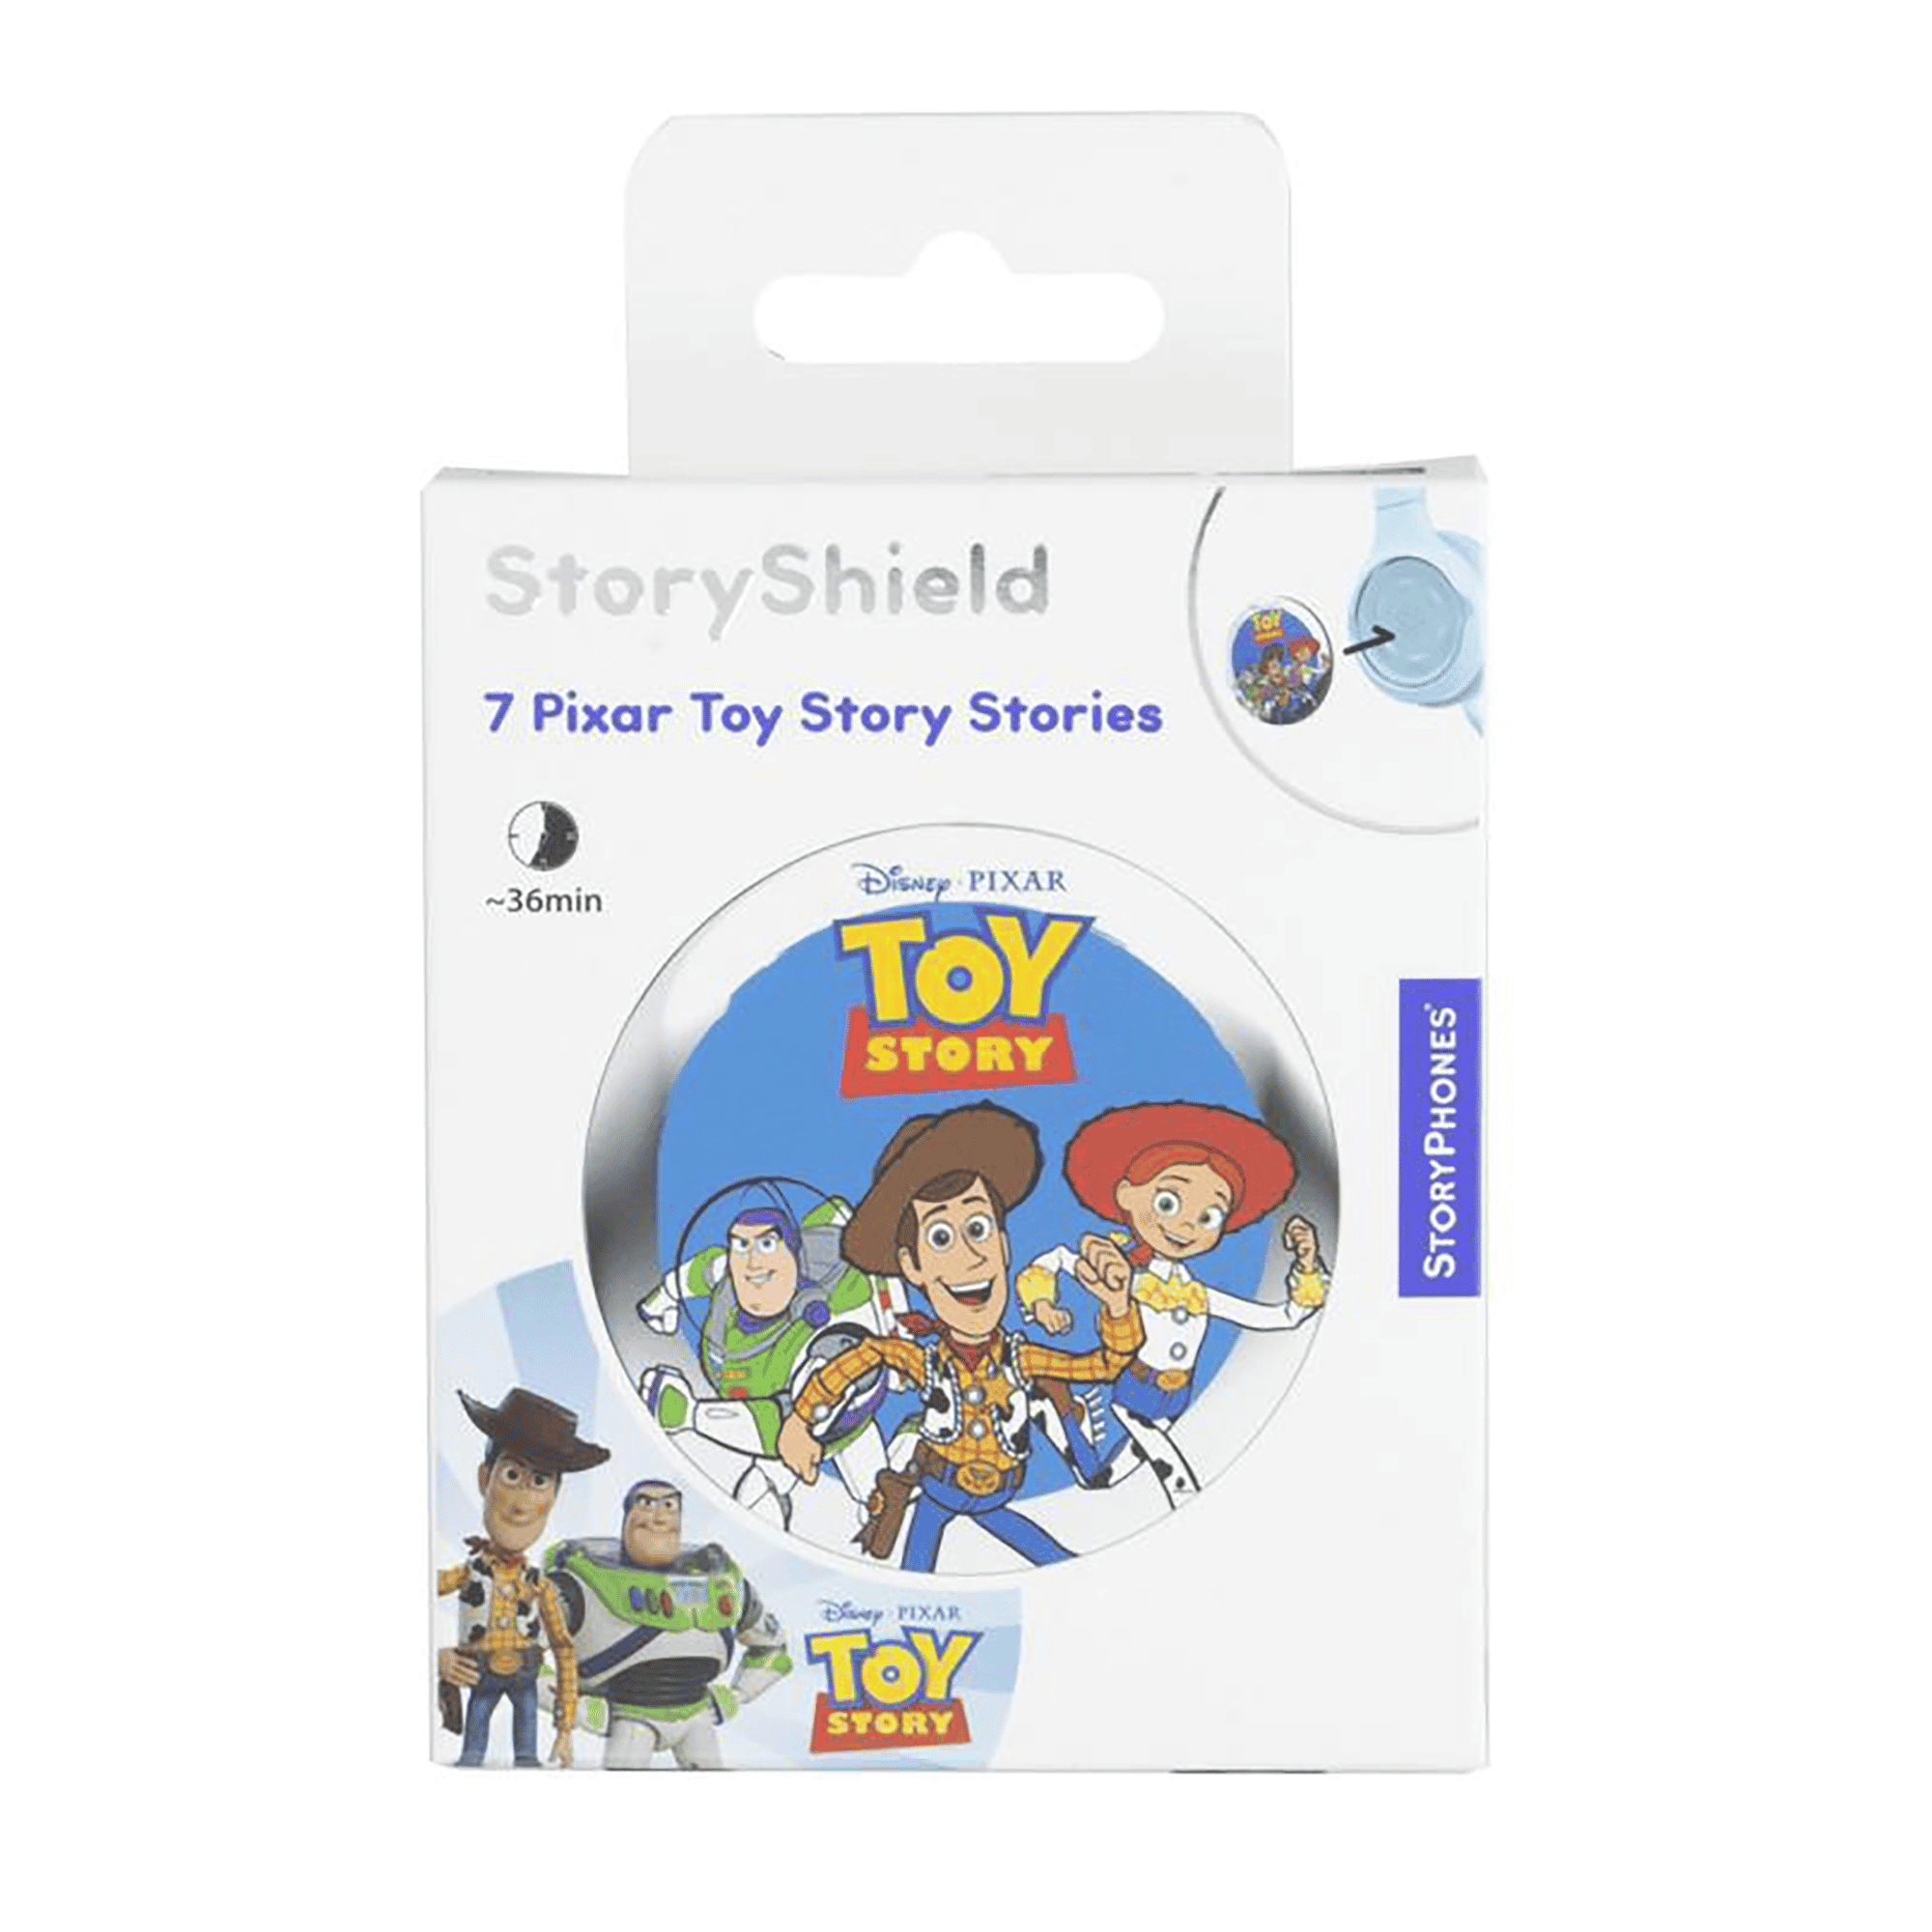 StoryShield Disney Collection - Toy Story onanoff Blau 2000583660705 2